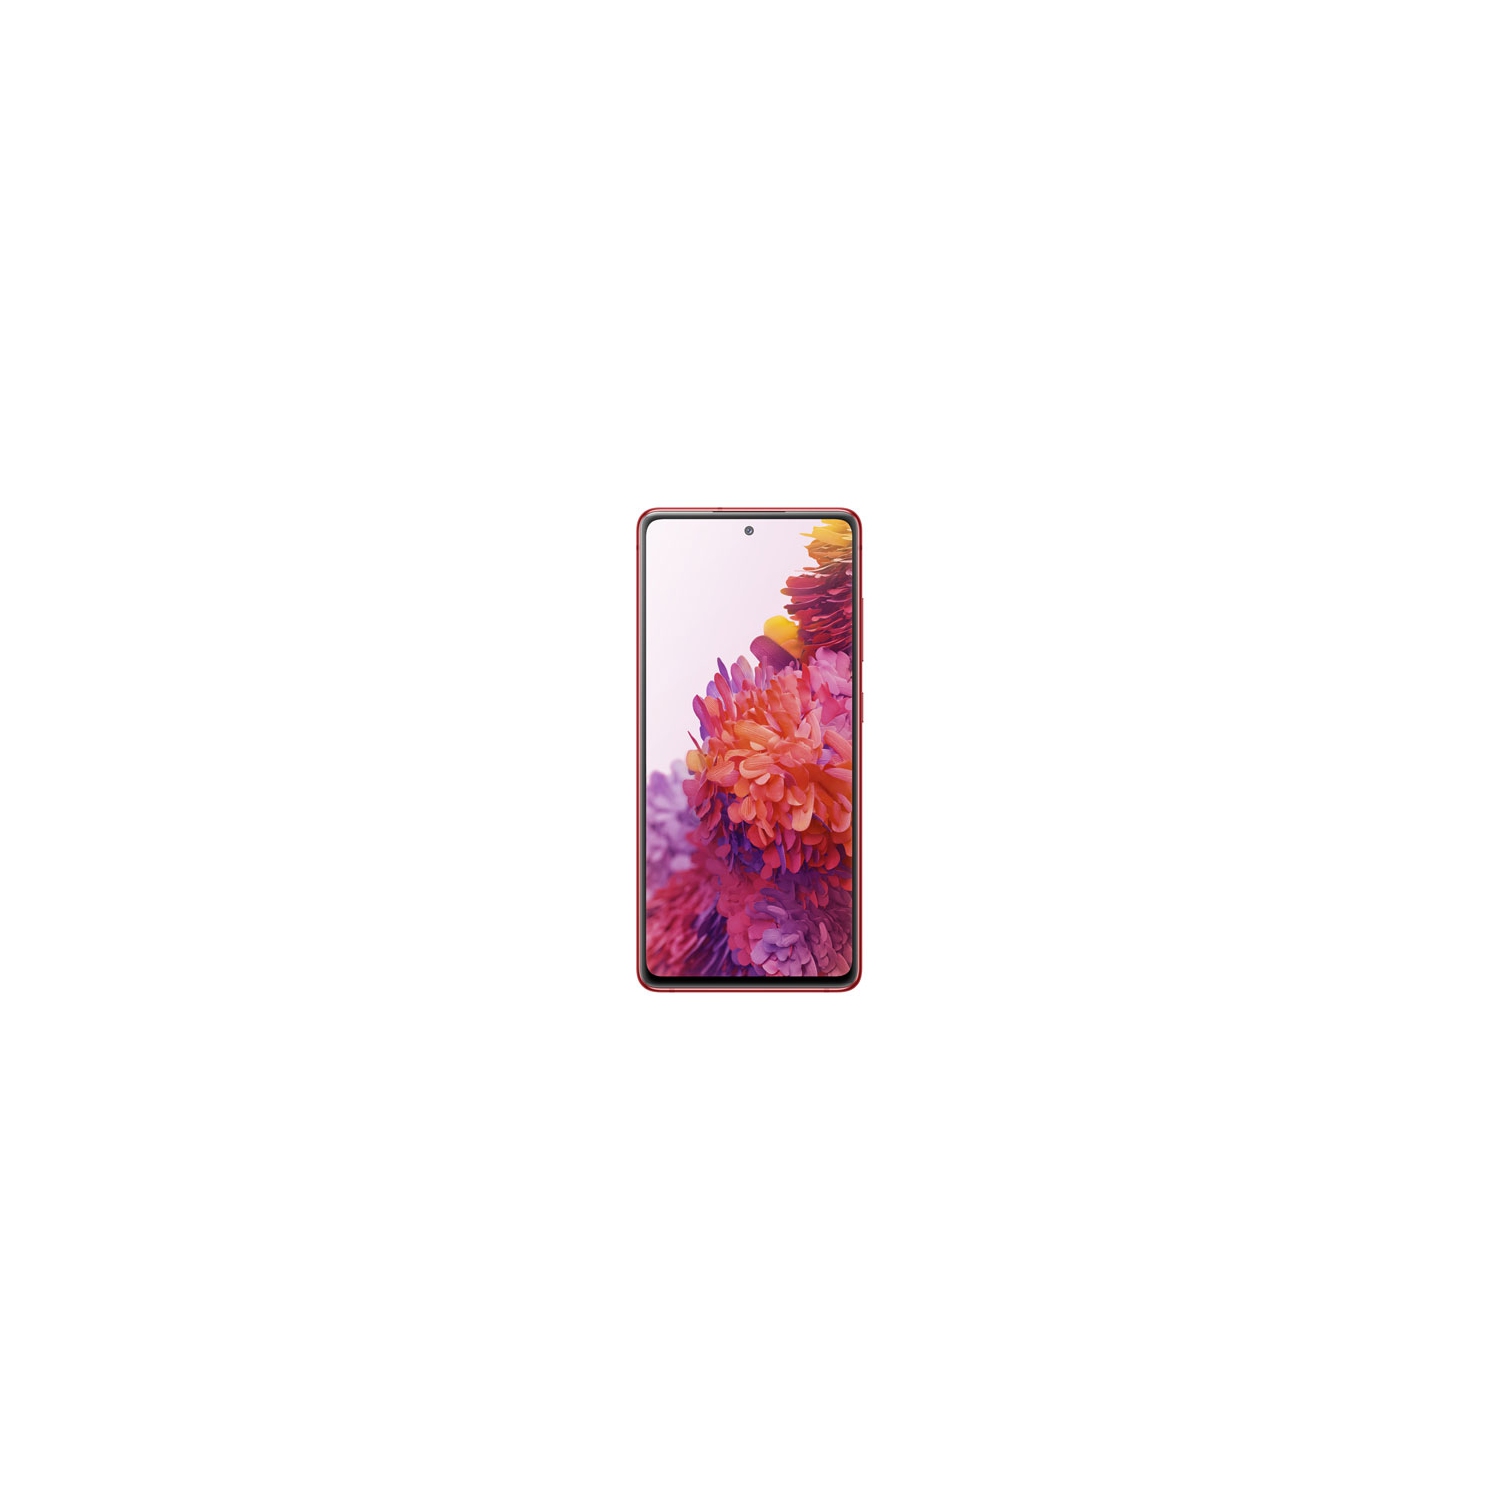 Refurbished (Good) - Samsung Galaxy S20 FE 5G 128GB Smartphone - Cloud Red - Unlocked